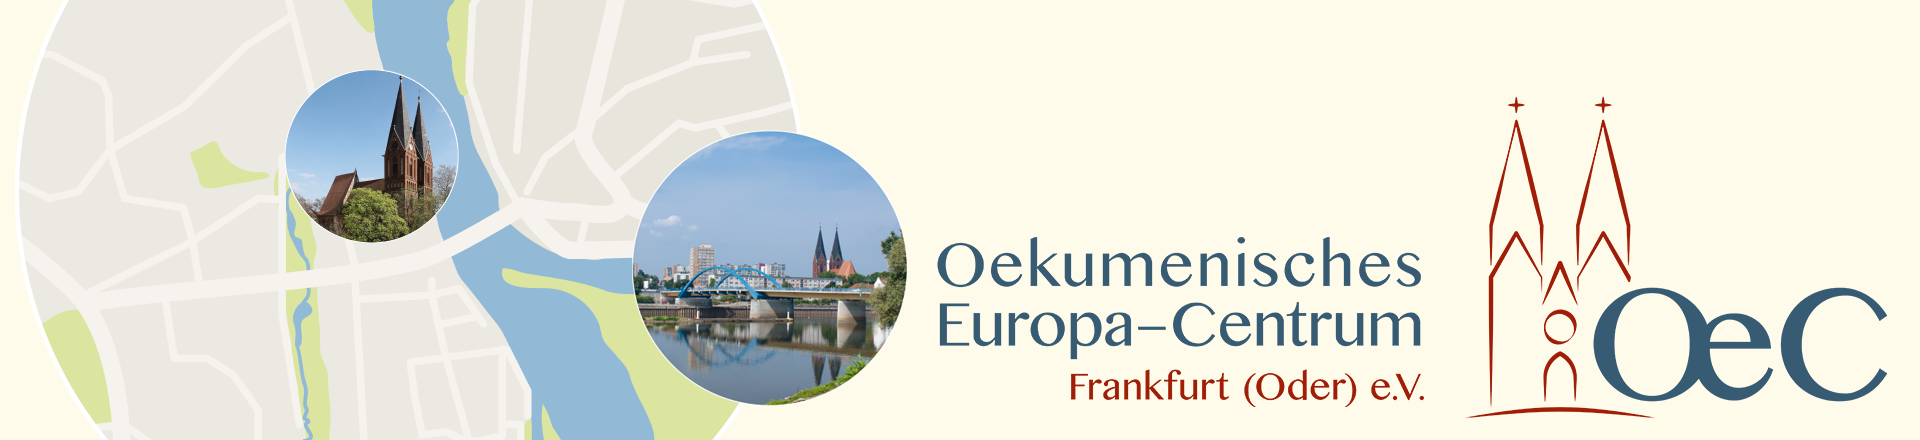 Oekumenisches Europa-Centrum Frankfurt (Oder) e.V.